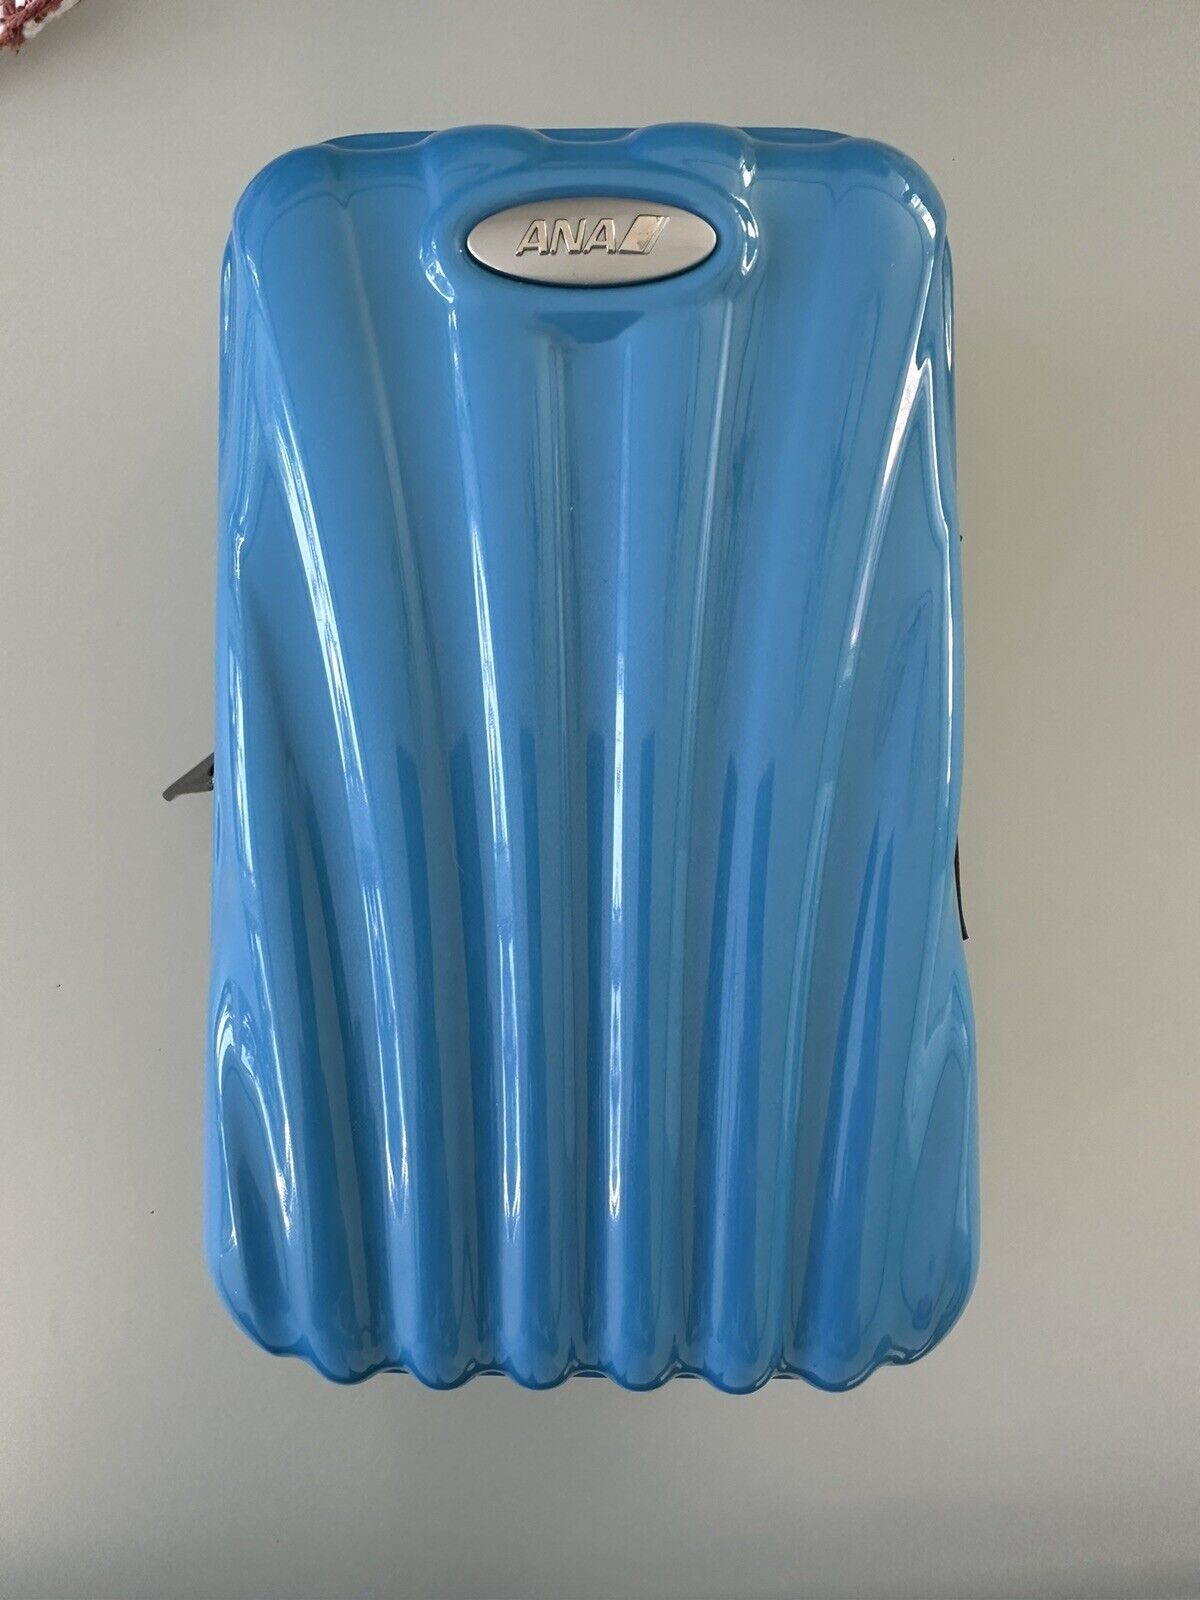 ANA First Class Amenity Kit Globe Trotter Samsonite BLUE - GINZA Products